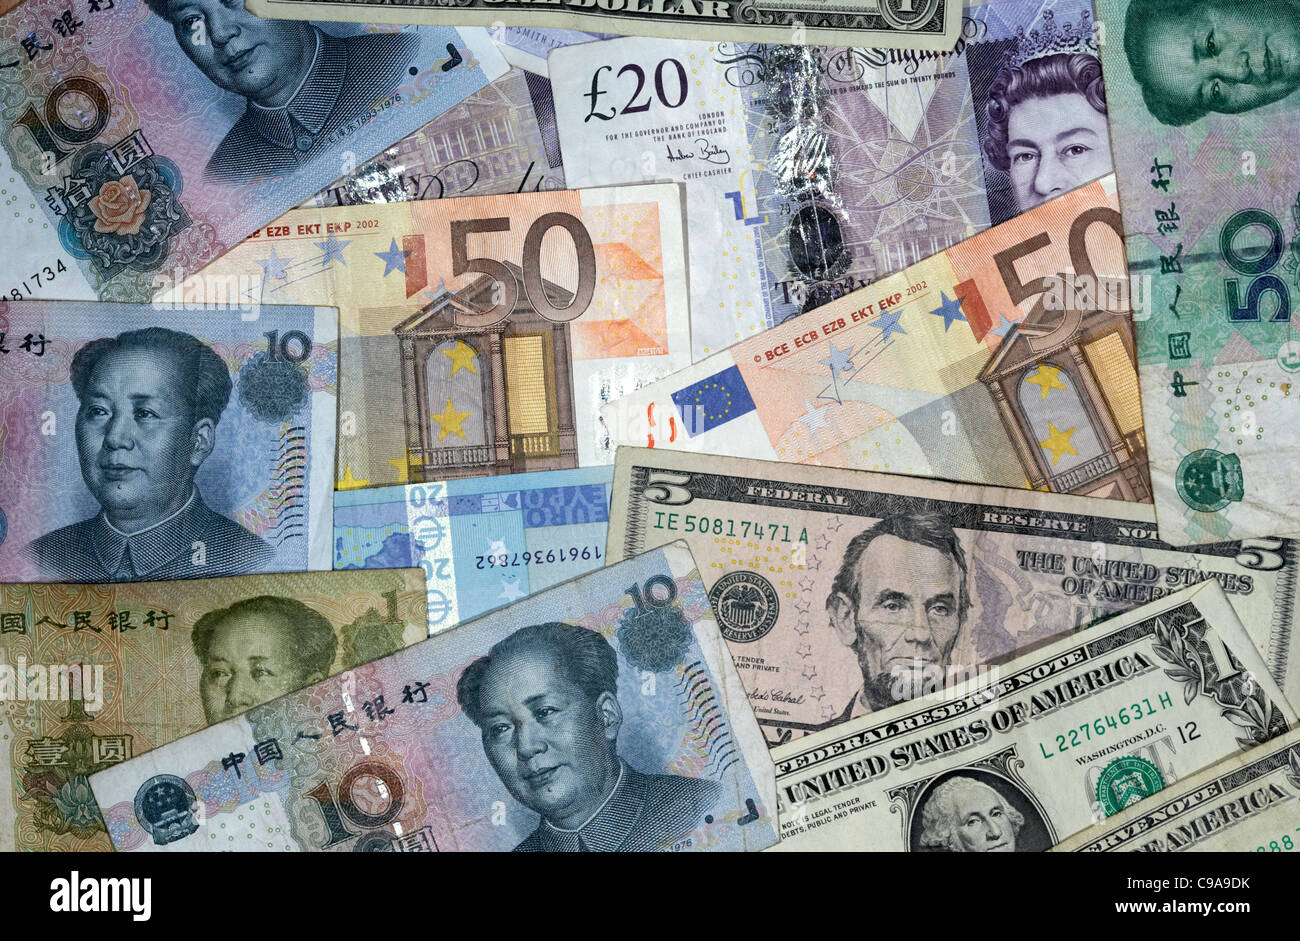 Varie valute comprese renminbi cinese rmb banconote di dollari euro e sterline inglesi Foto Stock